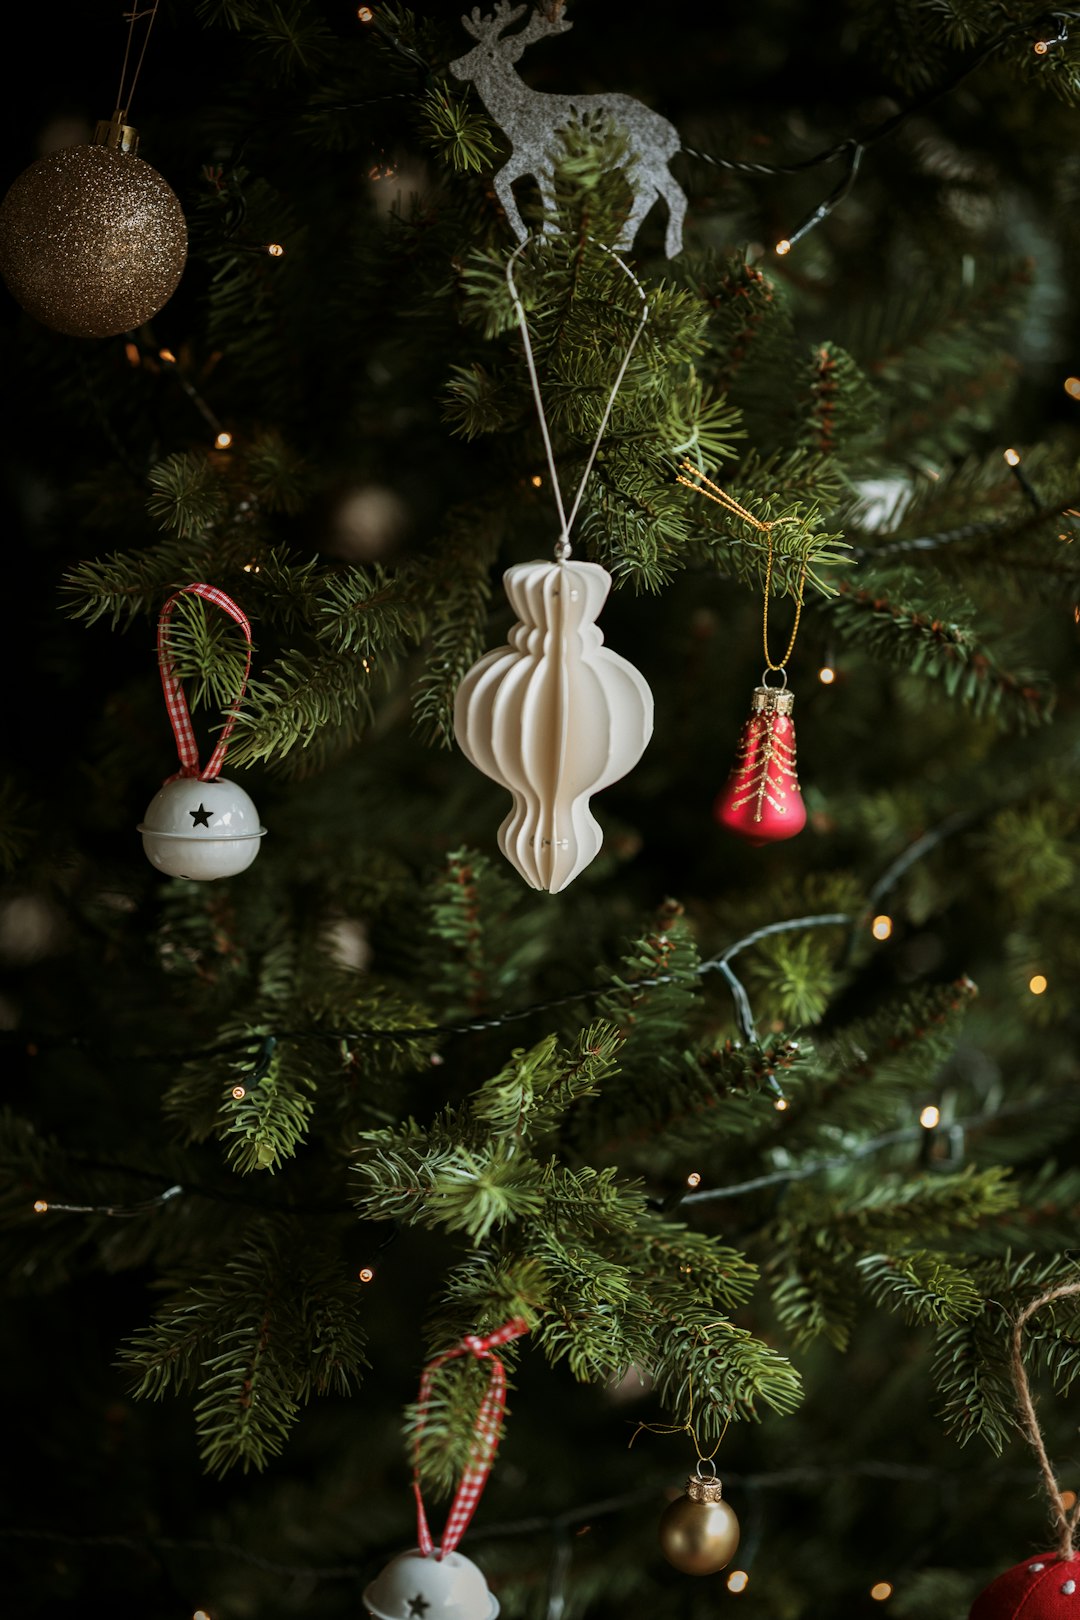 hanged ornaments on Christmas tree